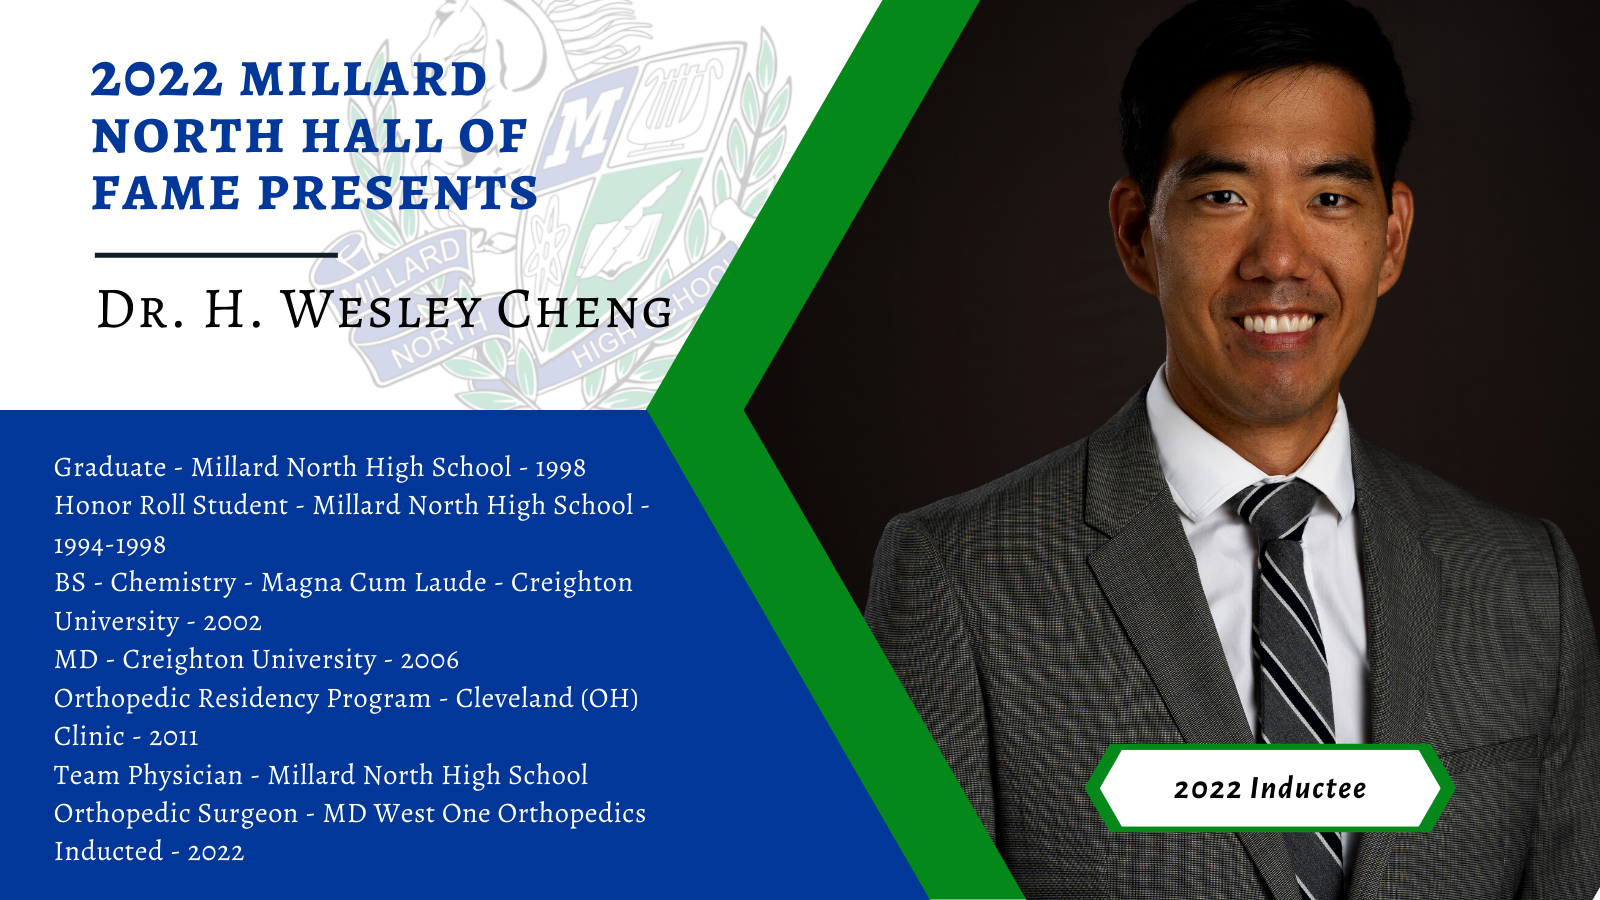 Dr. H. Wesley Cheng